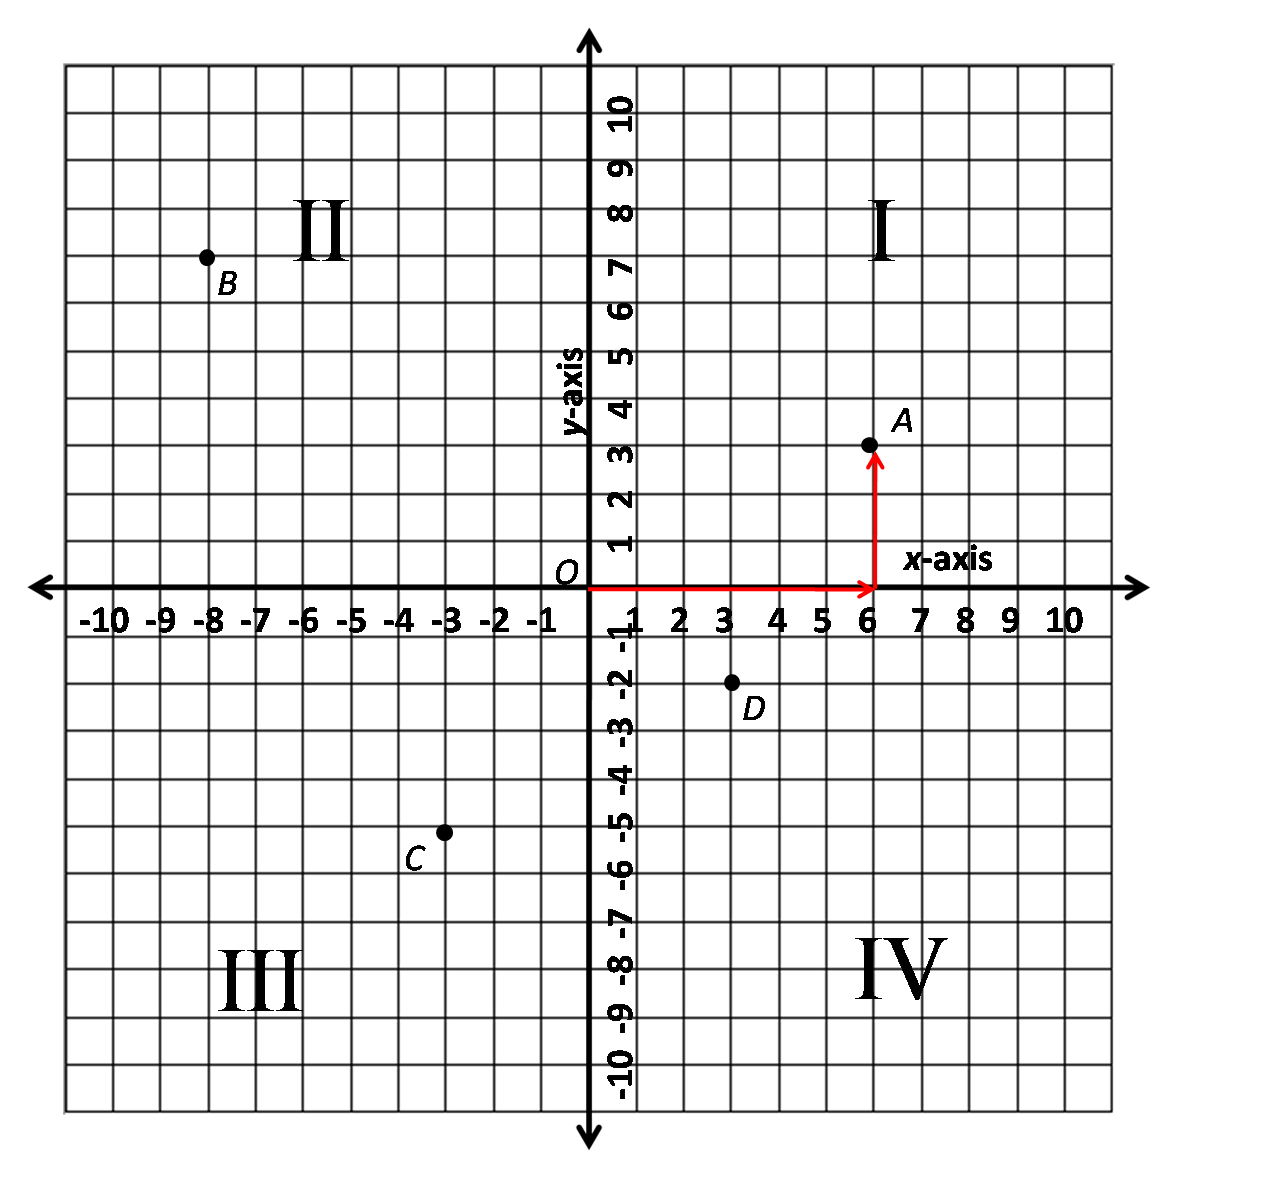 quadrants-in-cartesian-plane